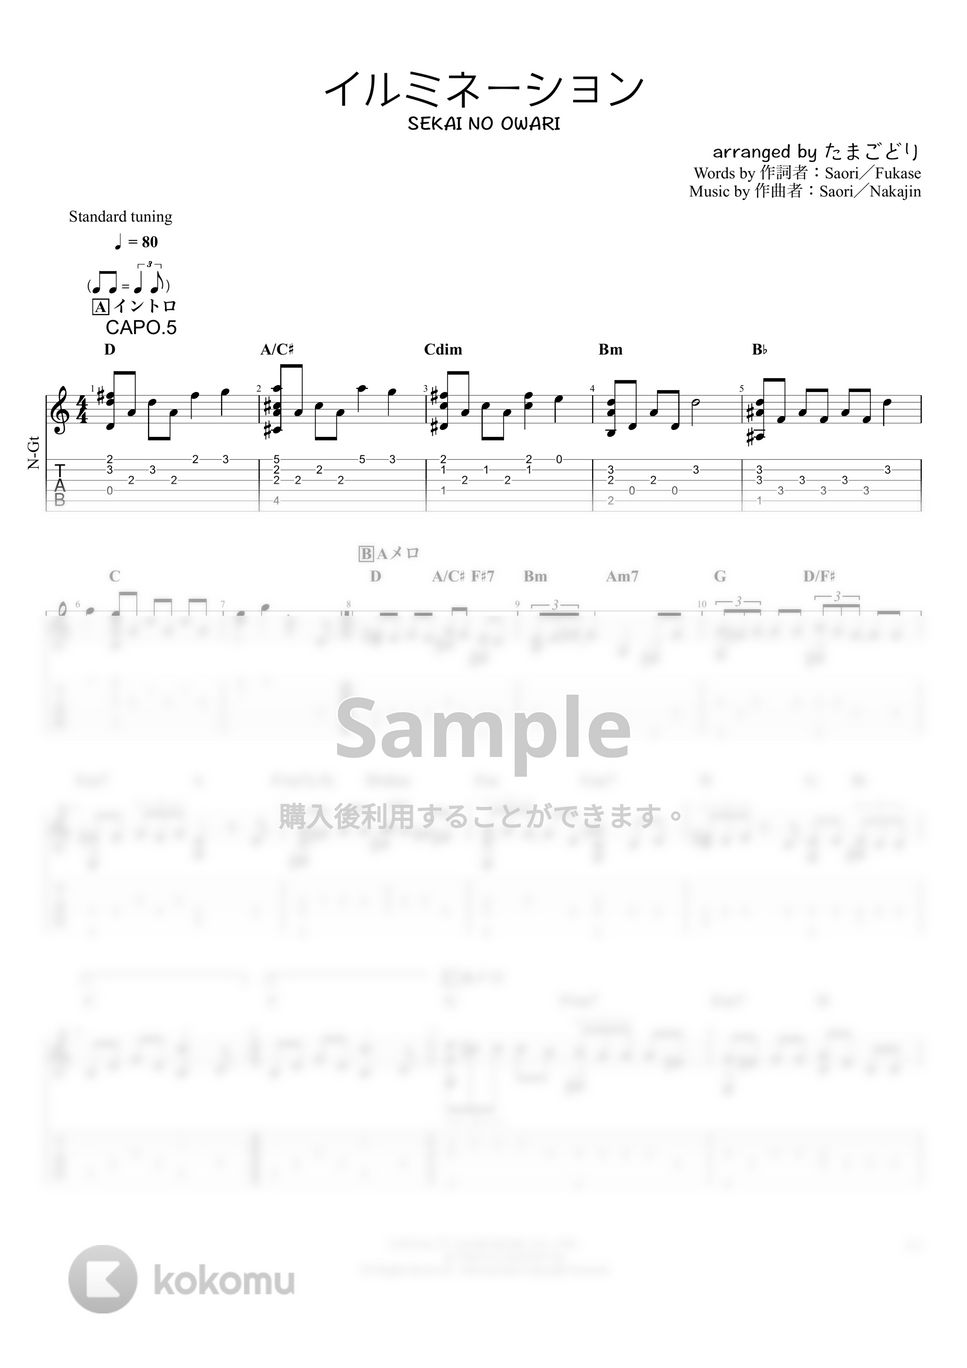 SEKAI NO OWARI - イルミネーション (ソロギター) by たまごどり